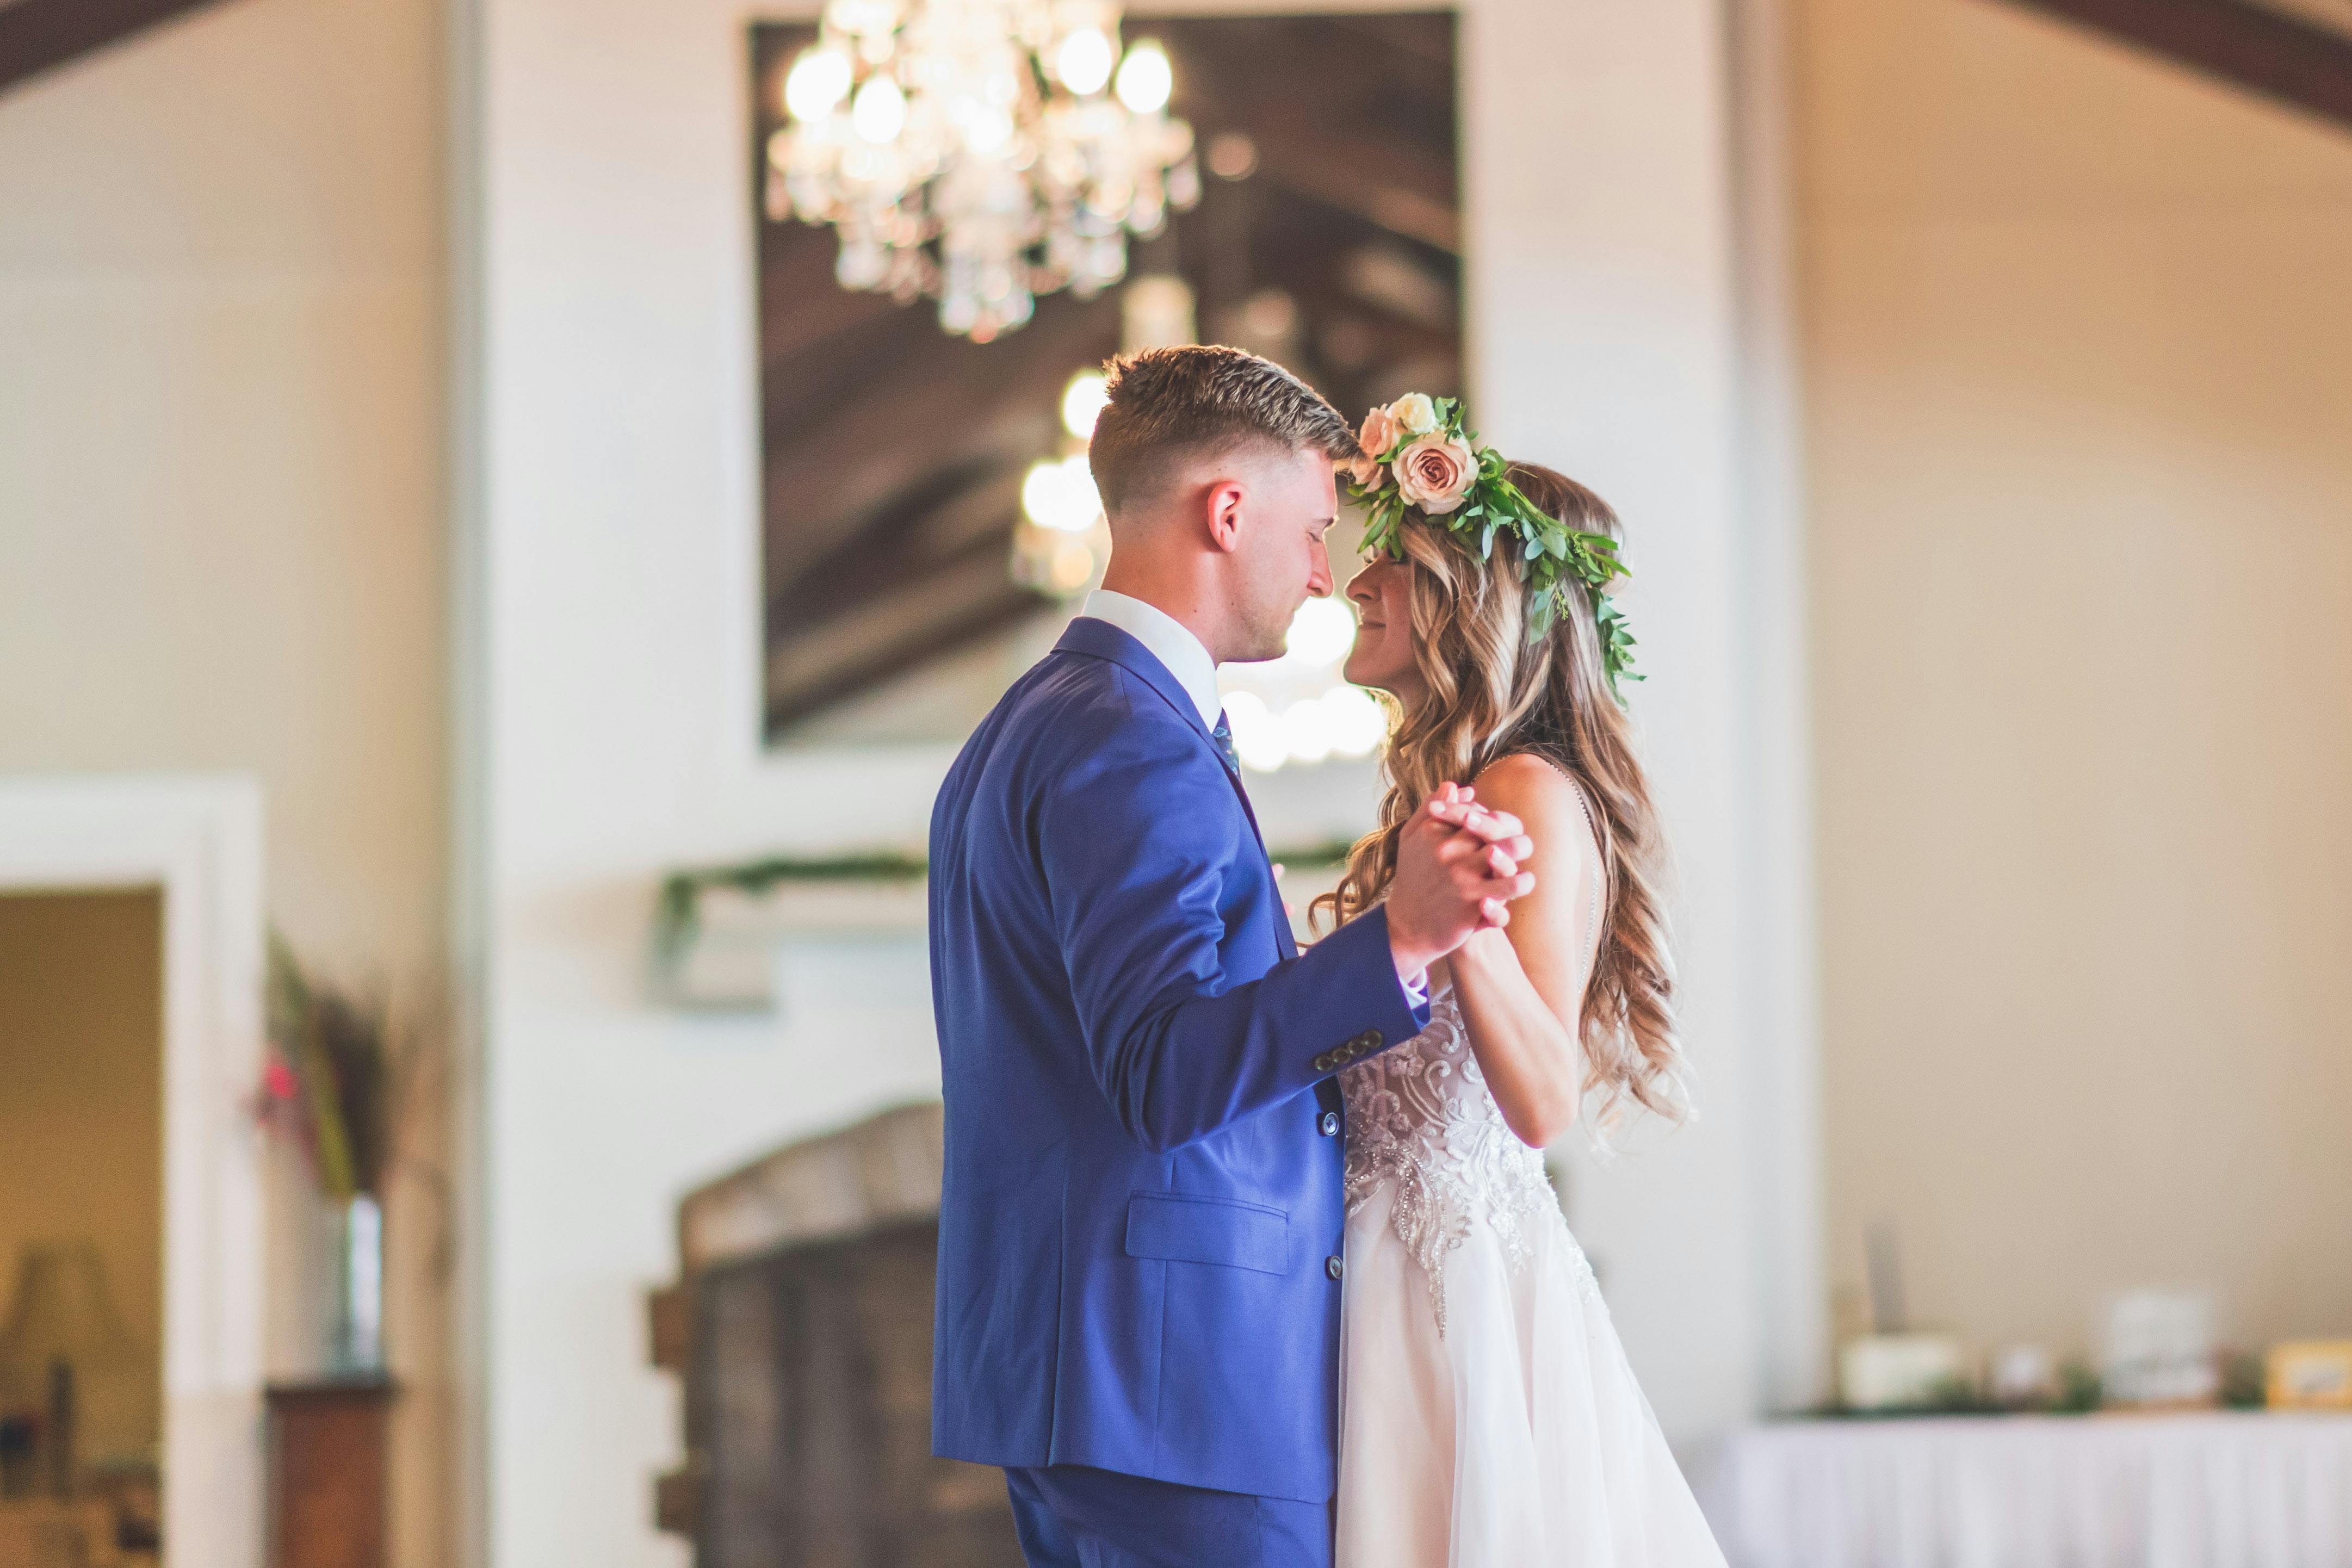 Newlyweds dancing inside of their wedding reception venue with bride wearing flower crown